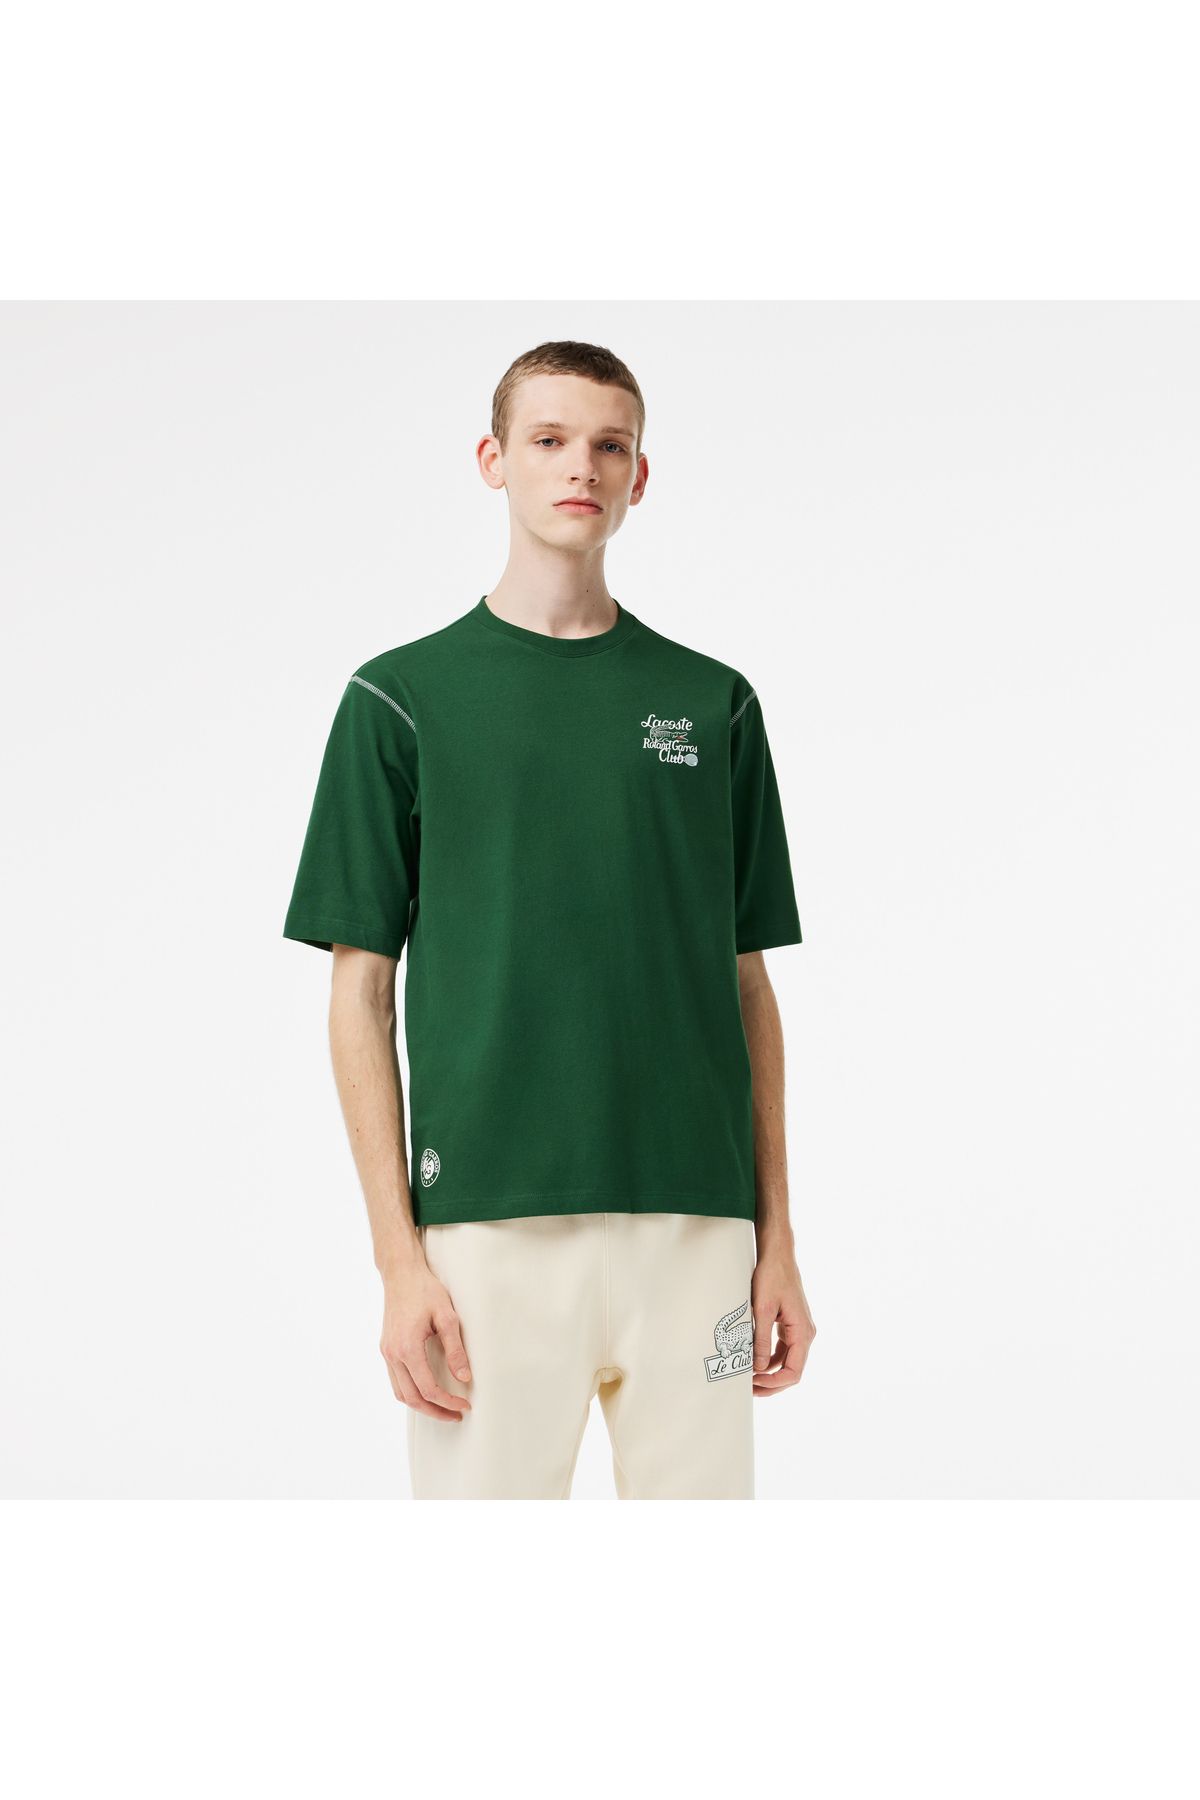 Lacoste Roland Garros Erkek Yeşil T-shirt